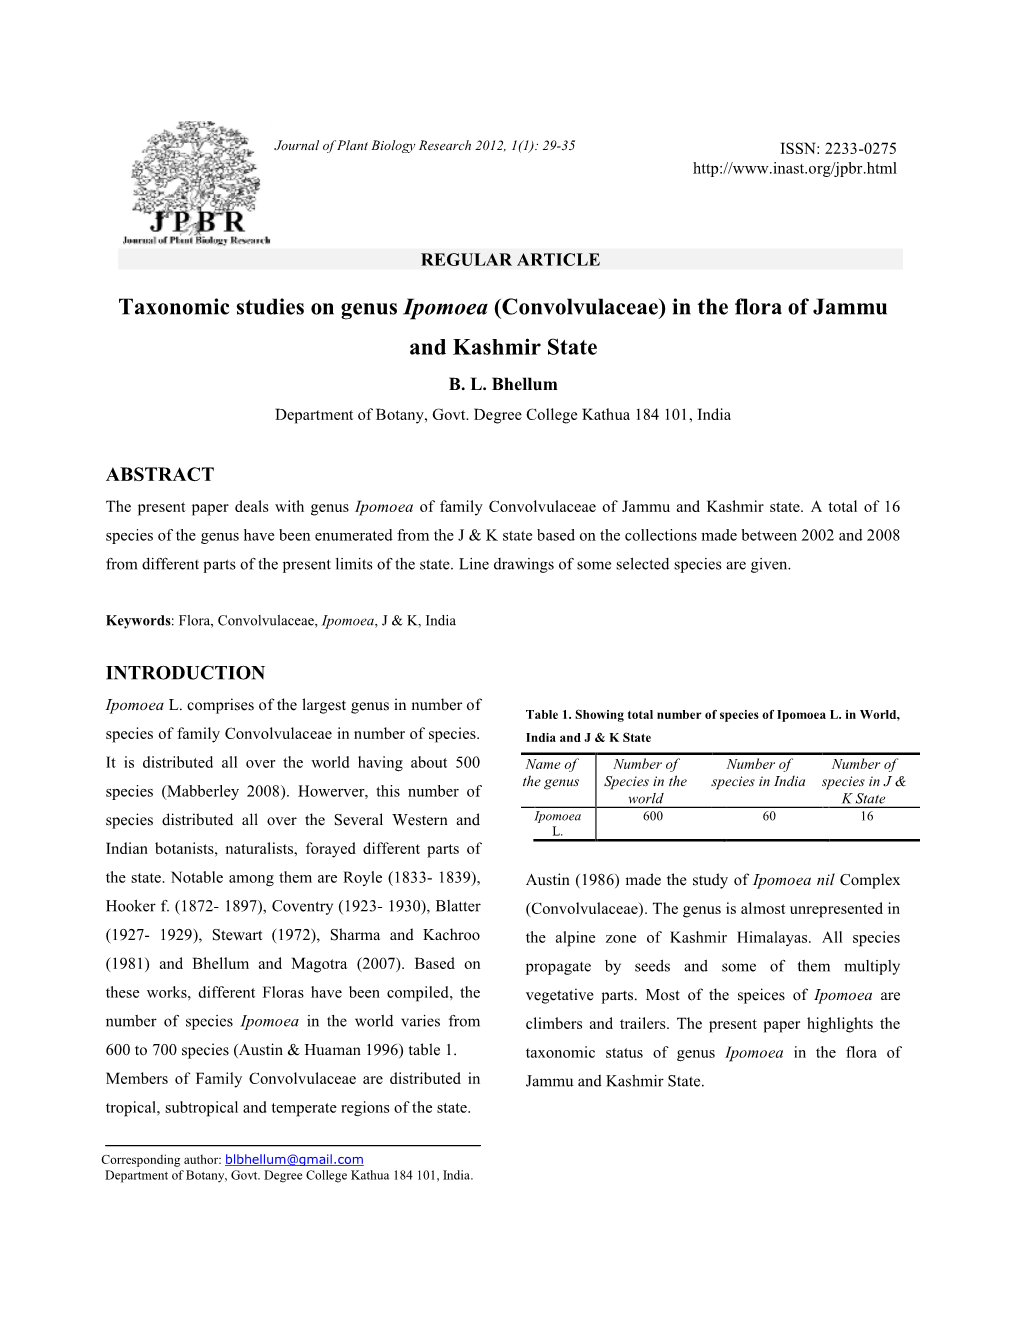 Taxonomic Studies on Genus Ipomoea (Convolvulaceae) in the Flora of Jammu and Kashmir State B